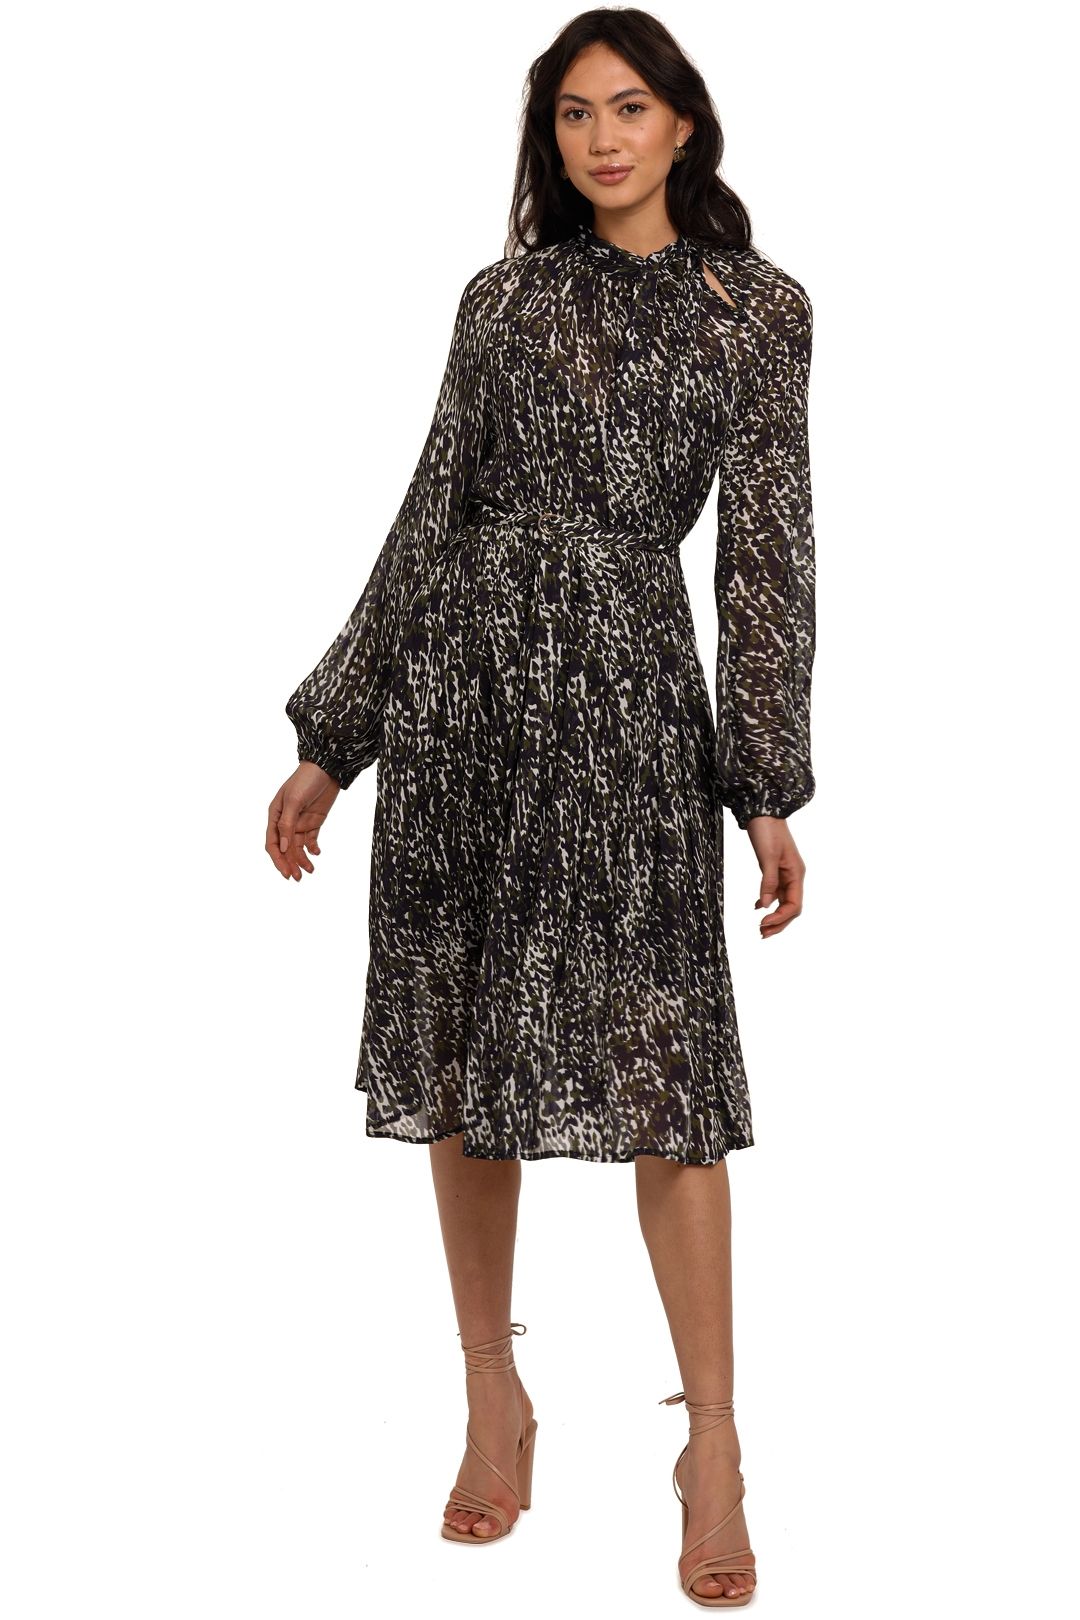 Kate Sylvester Shirley Printed Dress abstract